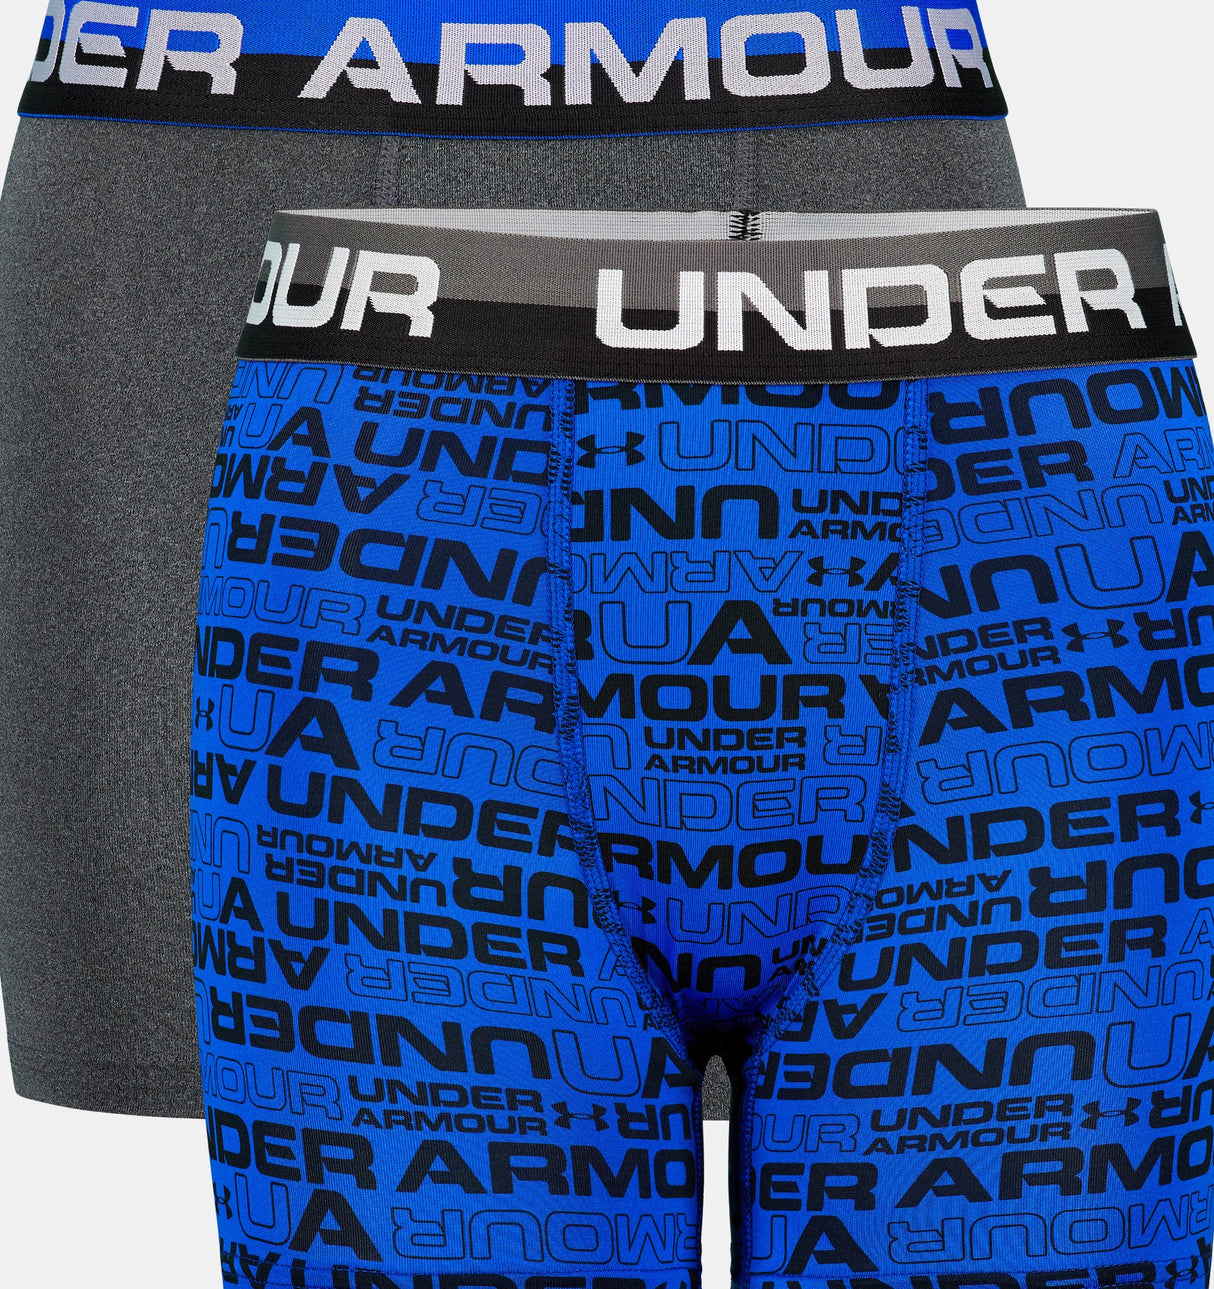 Under Armour Tech 3-inch Boxerjock 2-pack Underwear in Blue for